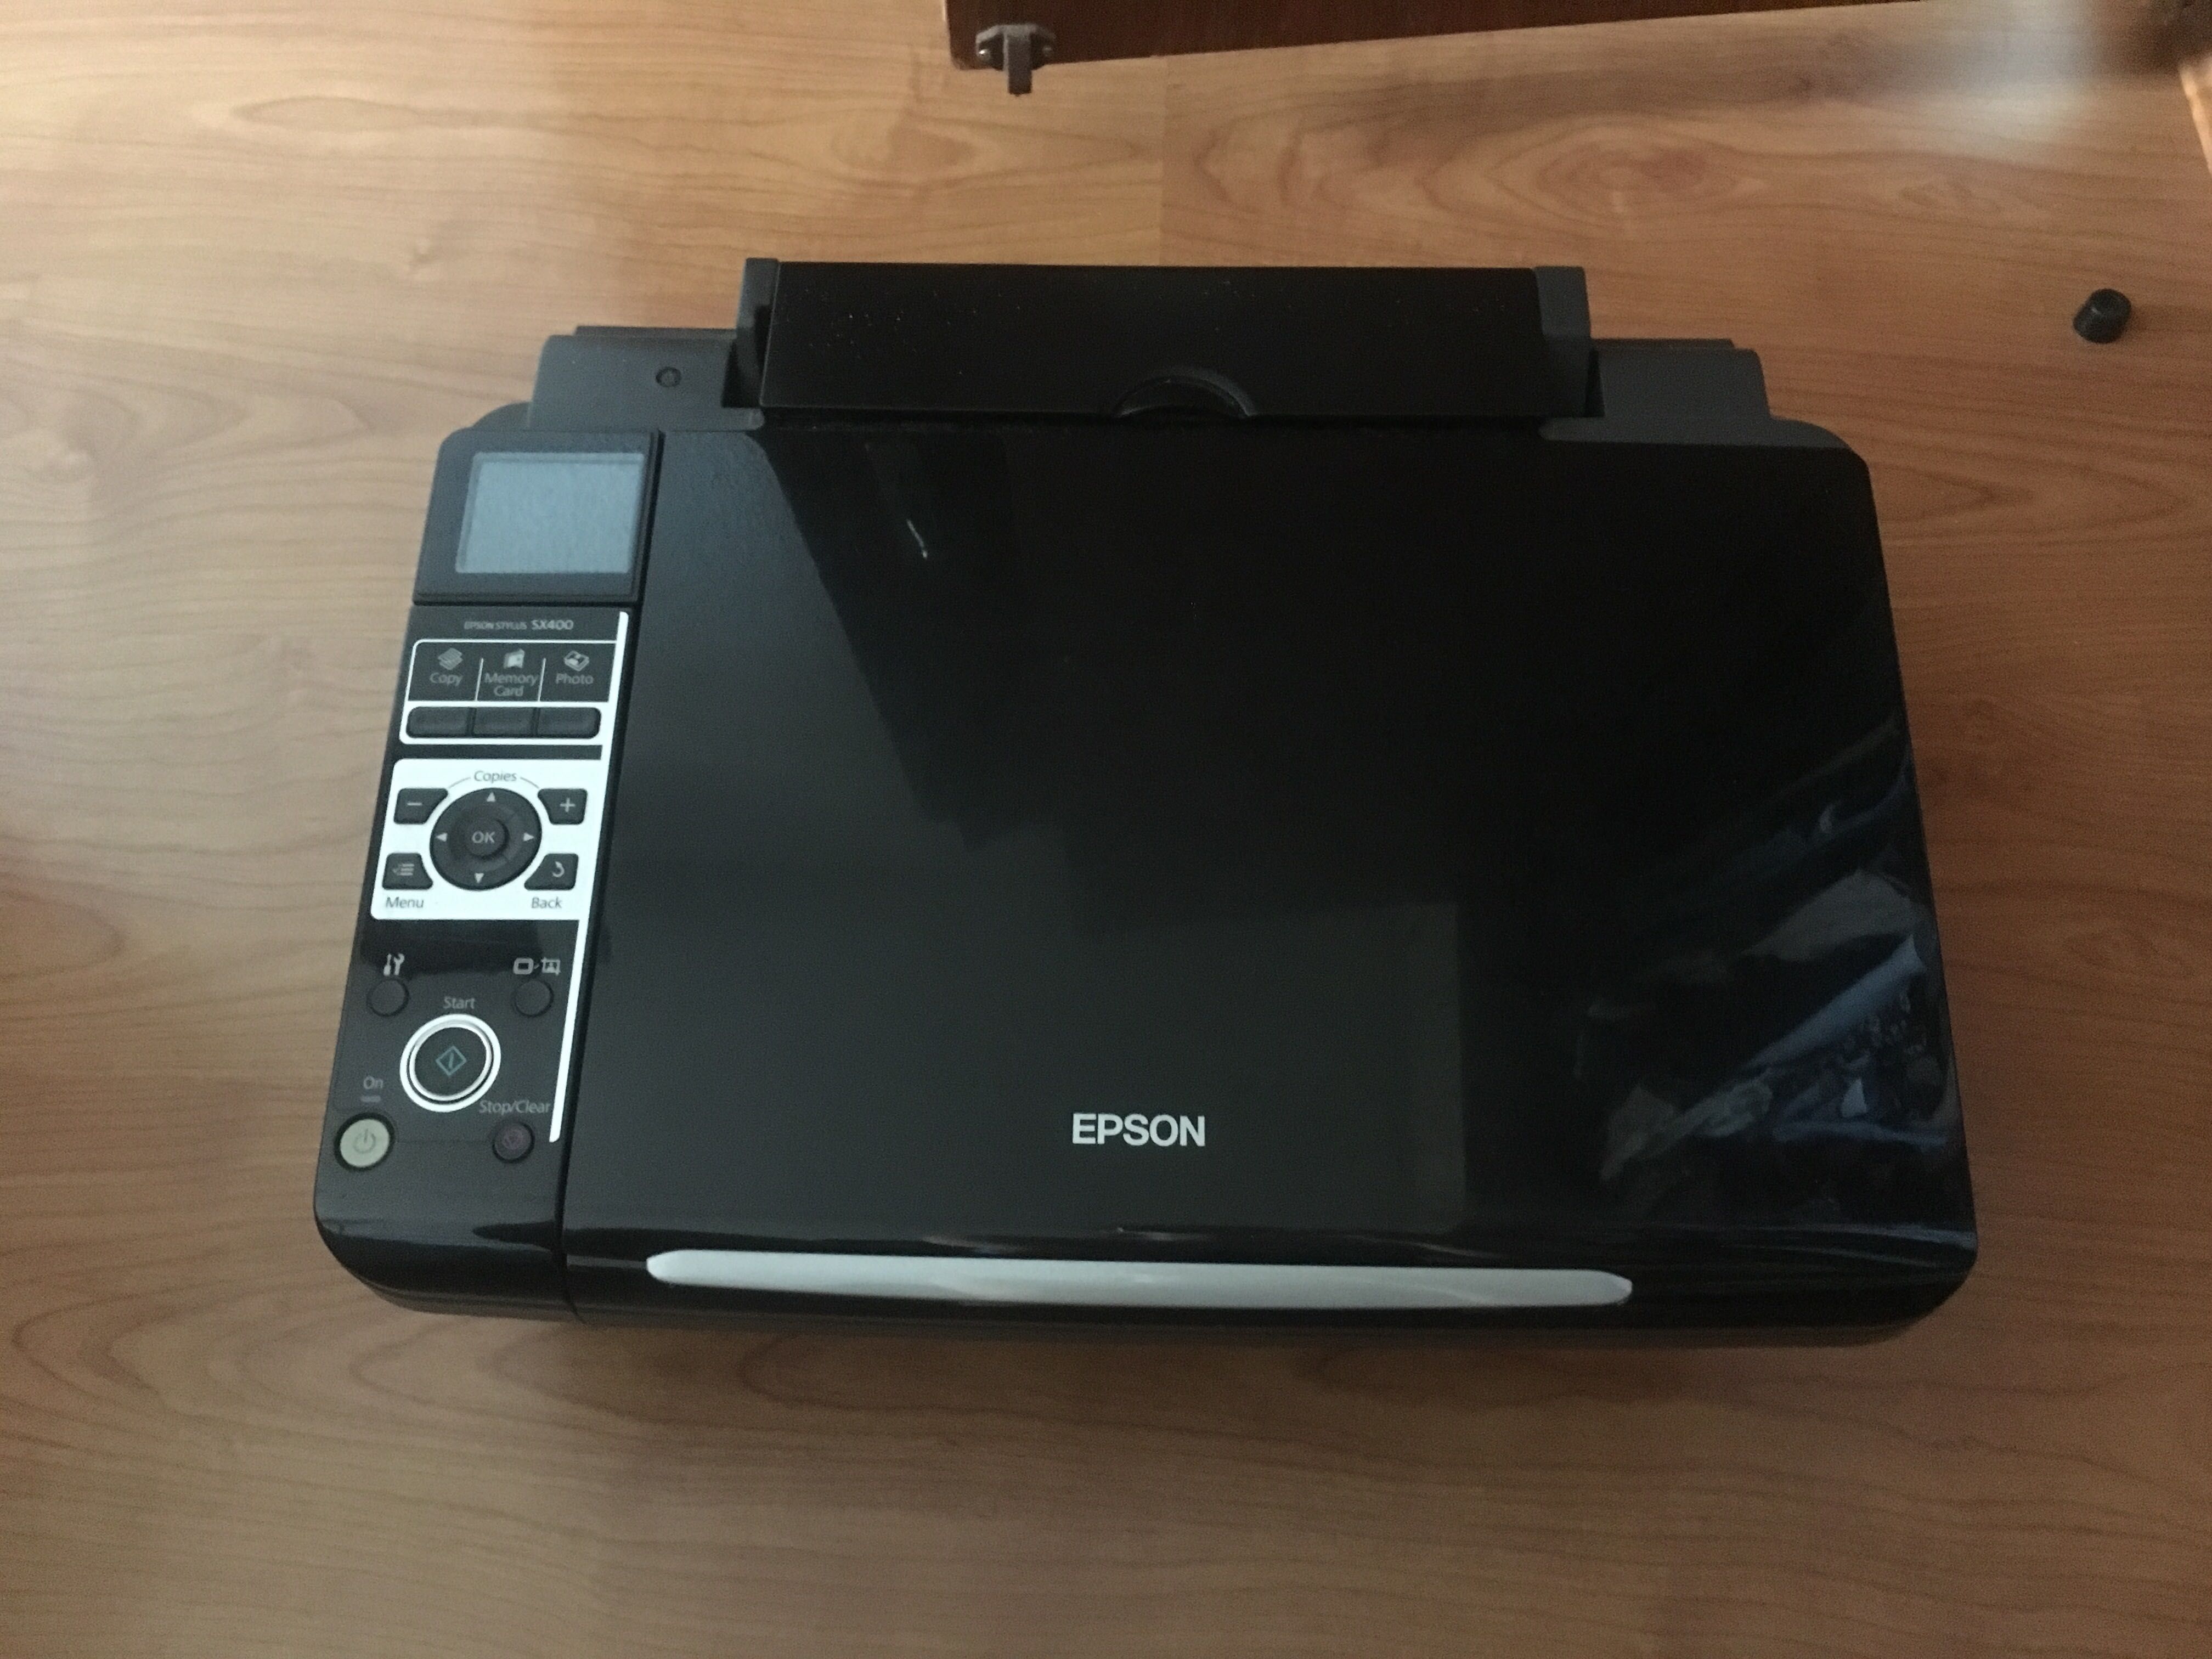 Impressora Epson sx 400